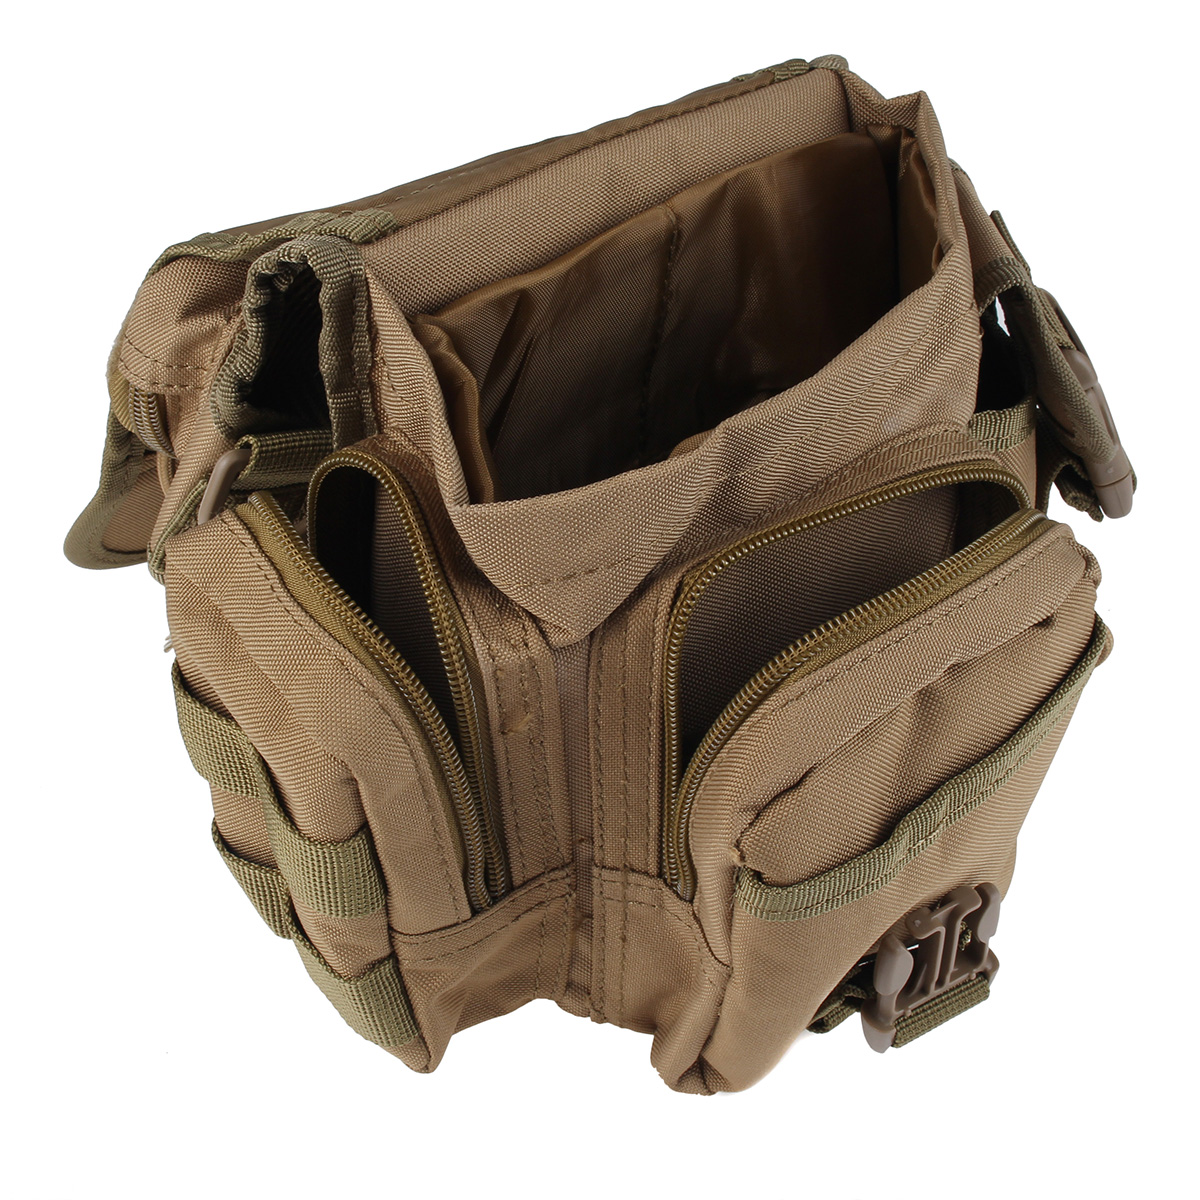 Nylon-Tactical-Waist-Bag-Military-Belt-Buckle-Pouches-Storage-Bag-Leg-Bag-Outdoor-Hunting-Climbing-1763612-4